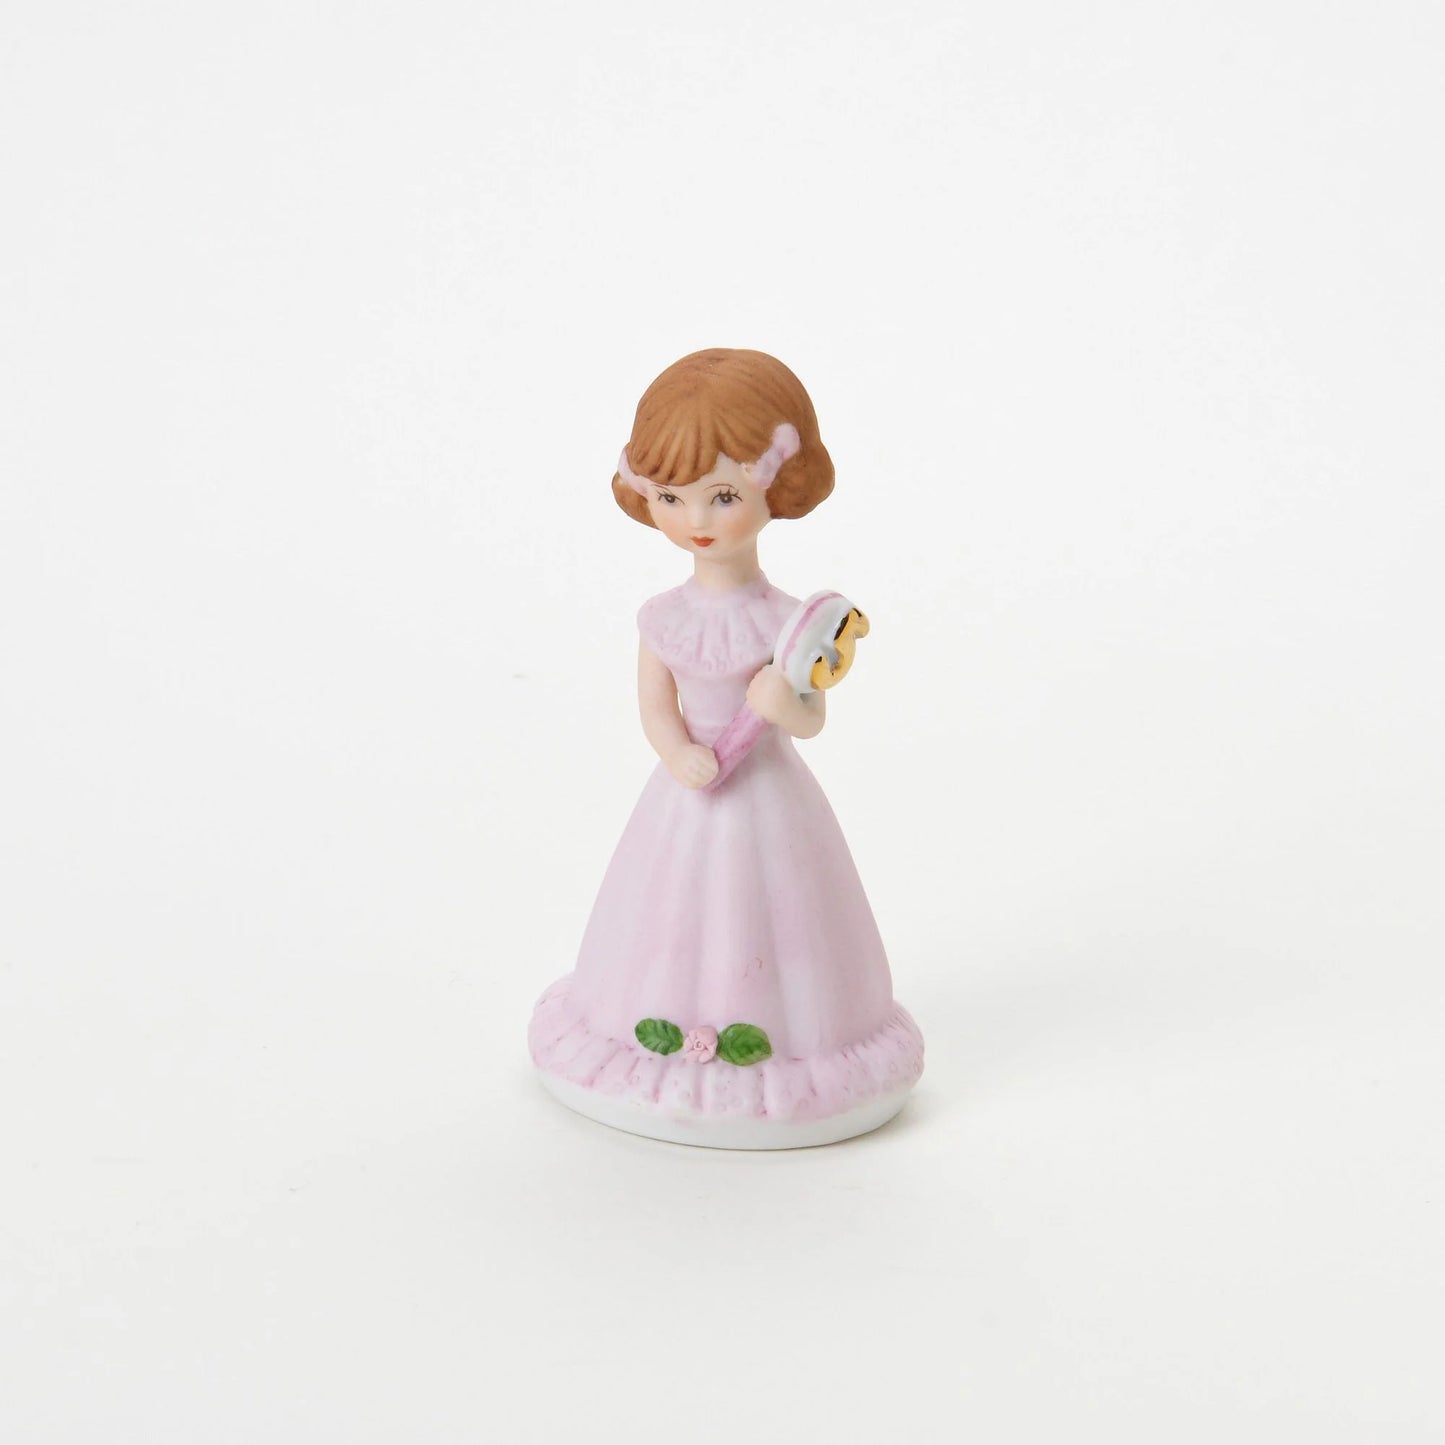 age 5 figurine